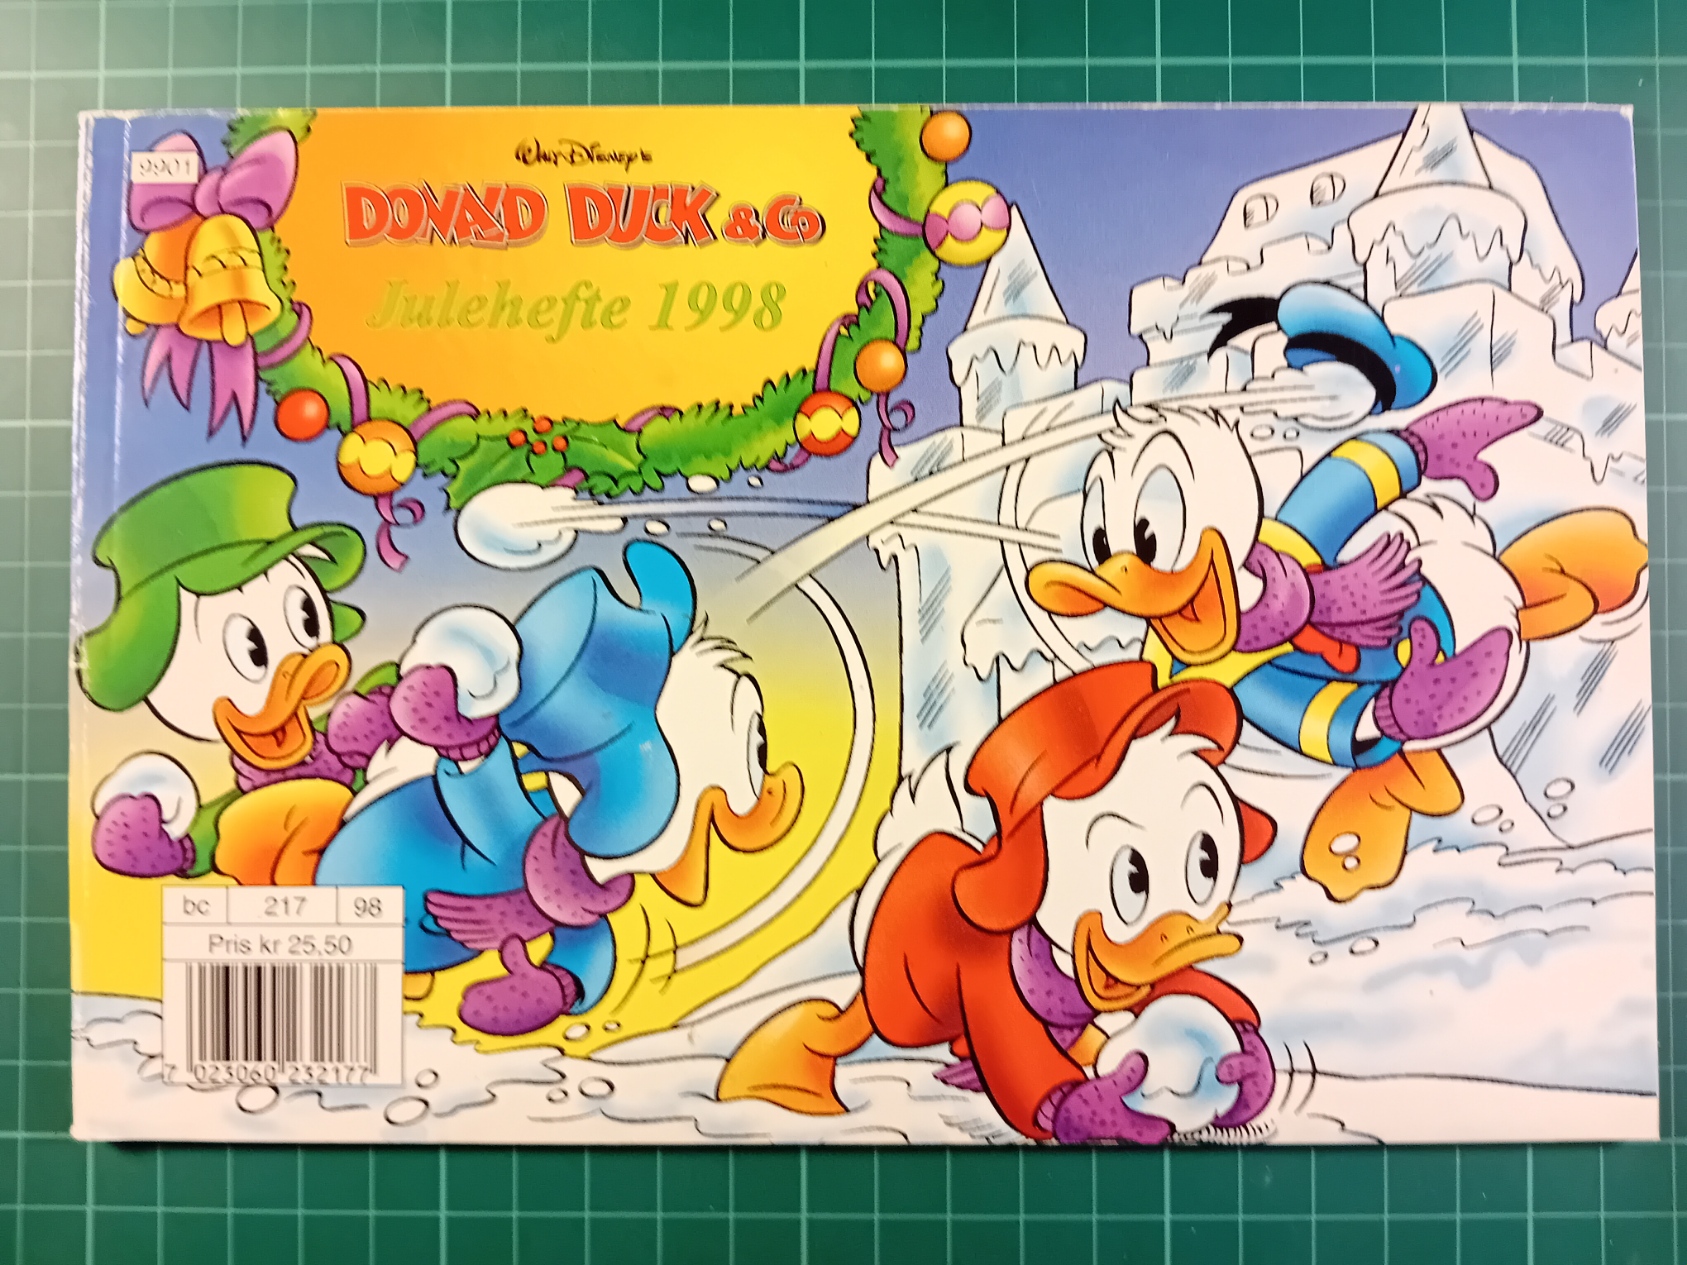 Julehefte Donald Duck & Co 1998